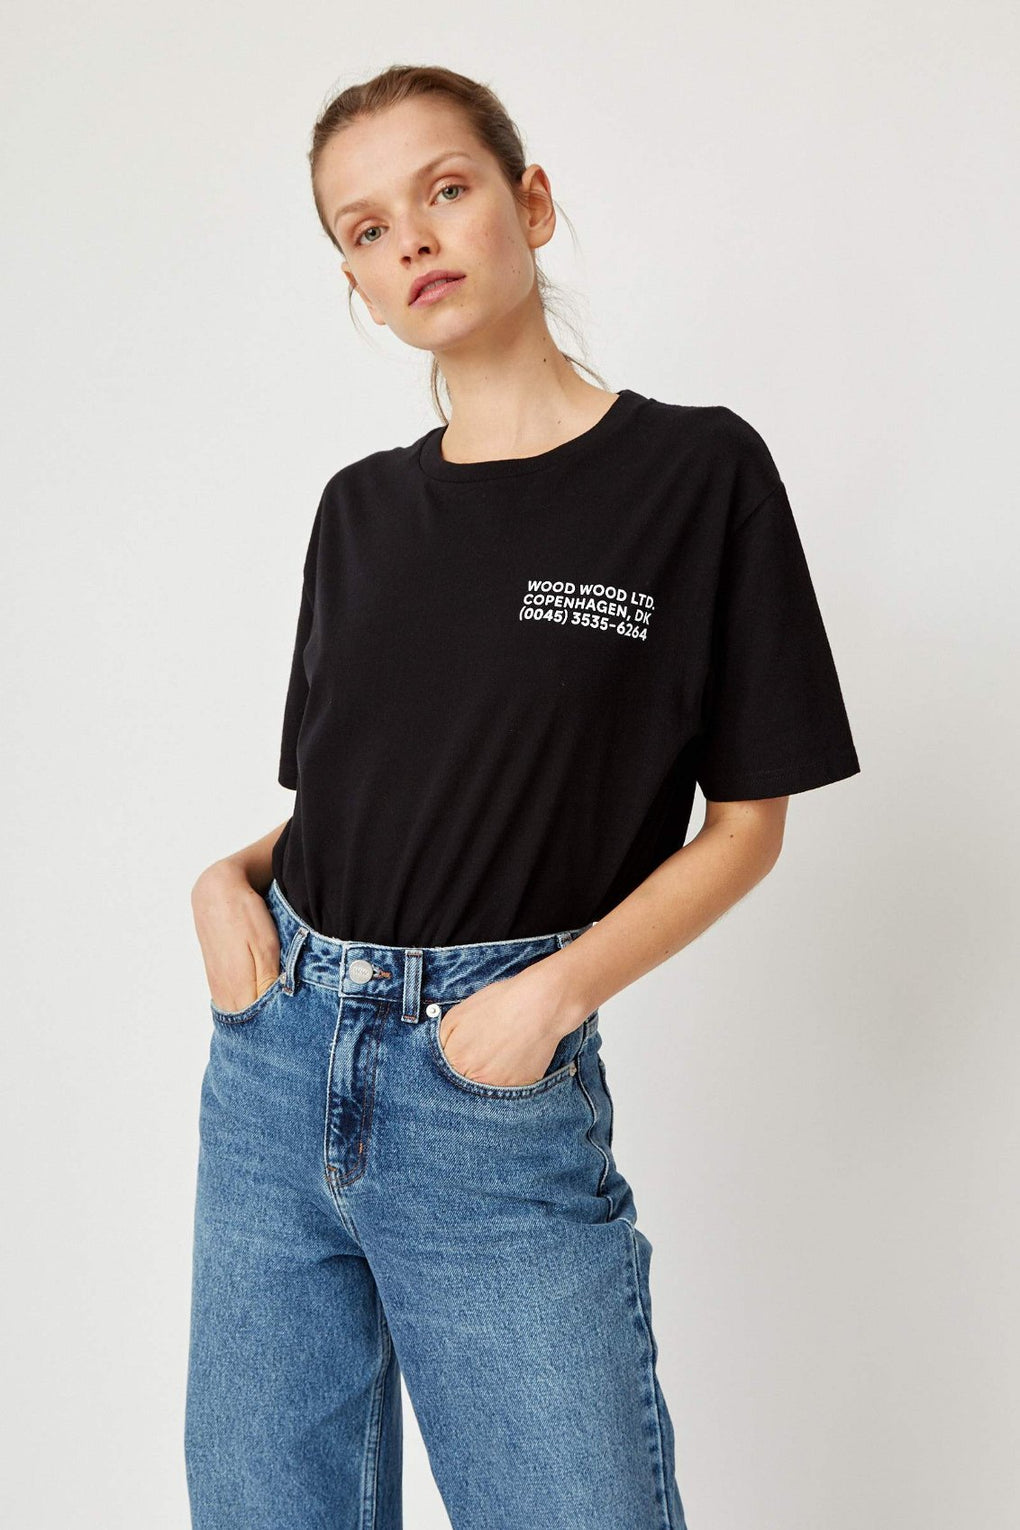 Wood Wood - unisex t-shirt - Idun - St. Paul - black t-shirt